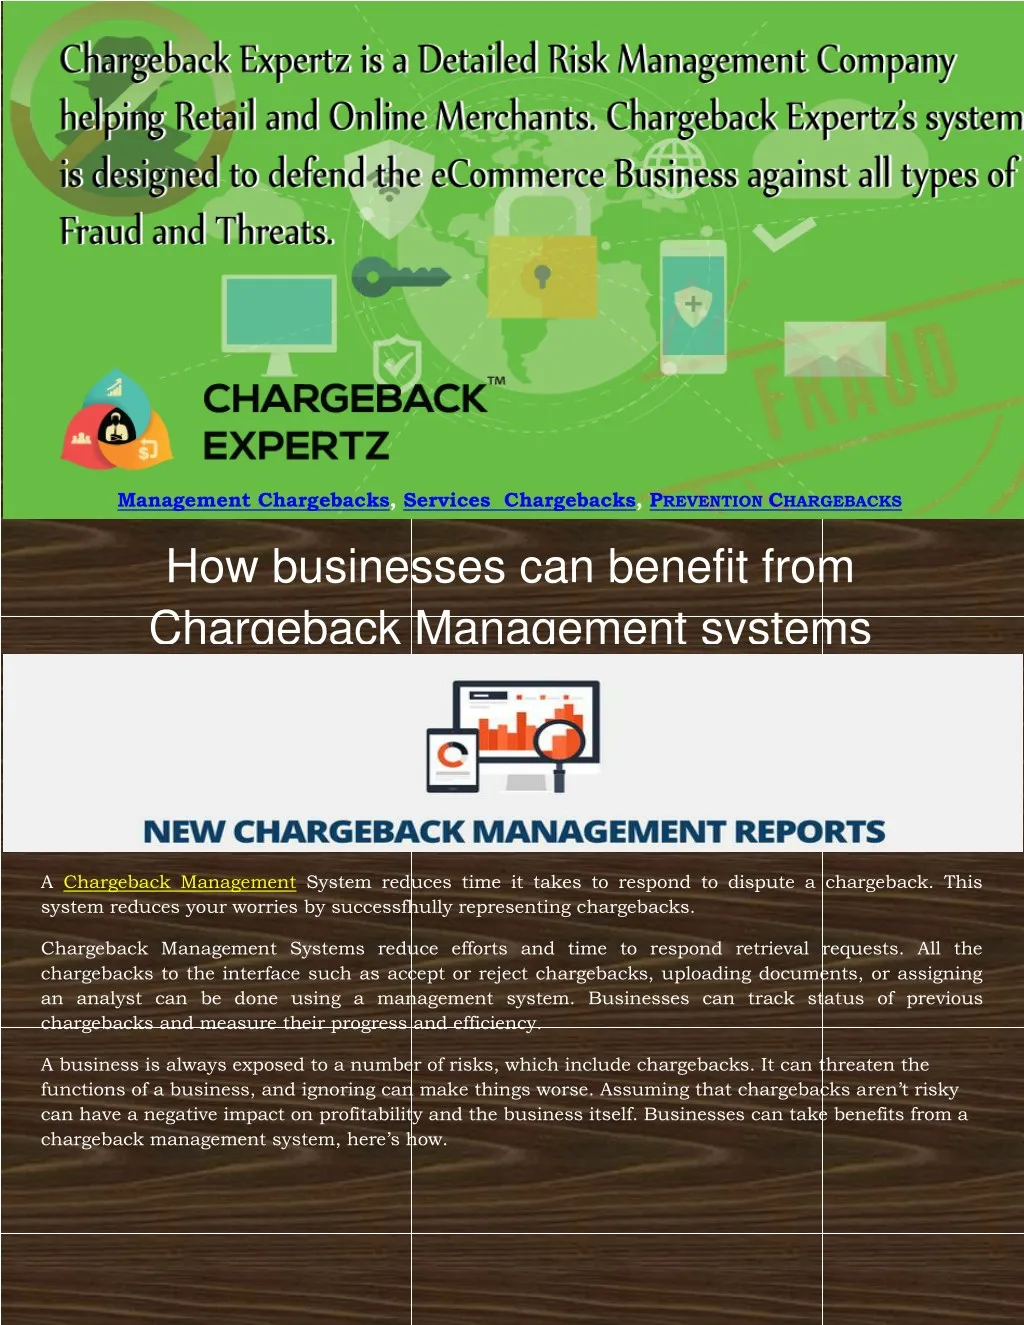 management chargebacks services chargebacks